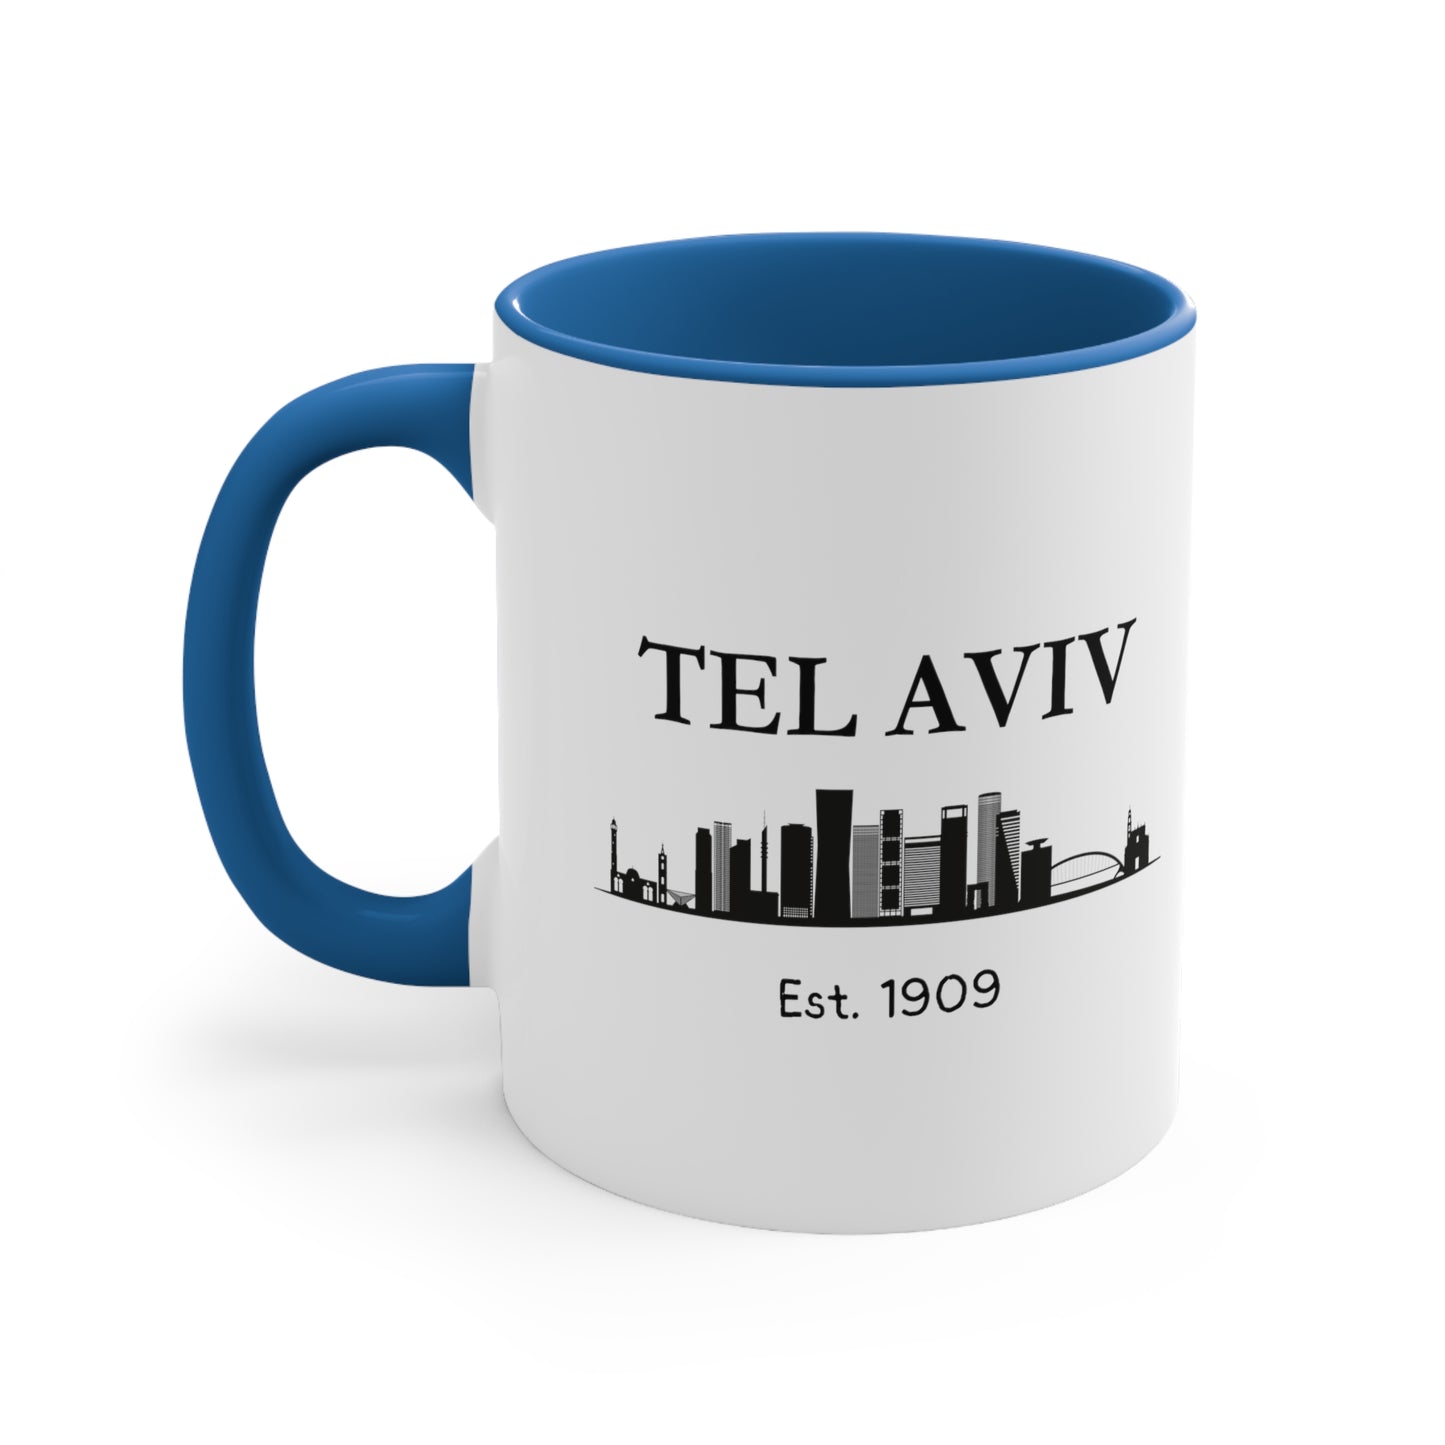 Tel Aviv - Est. 1909 - Accent Coffee Mug, 11oz